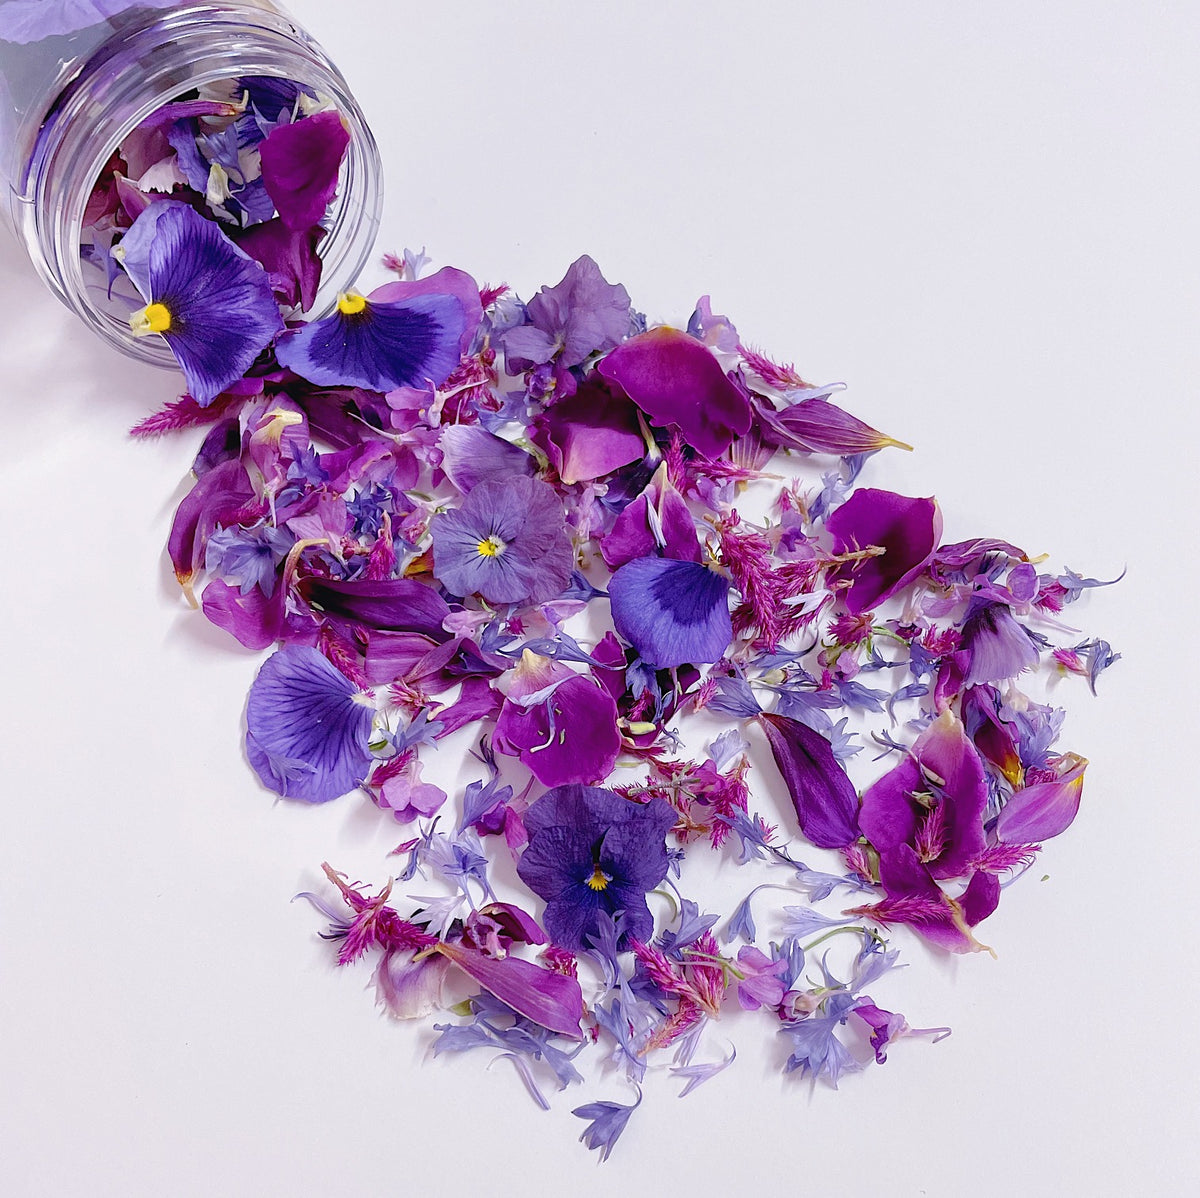 PURPLE PASSION FLOWERFETTI® - Freeze Dried Edible Flower Confetti